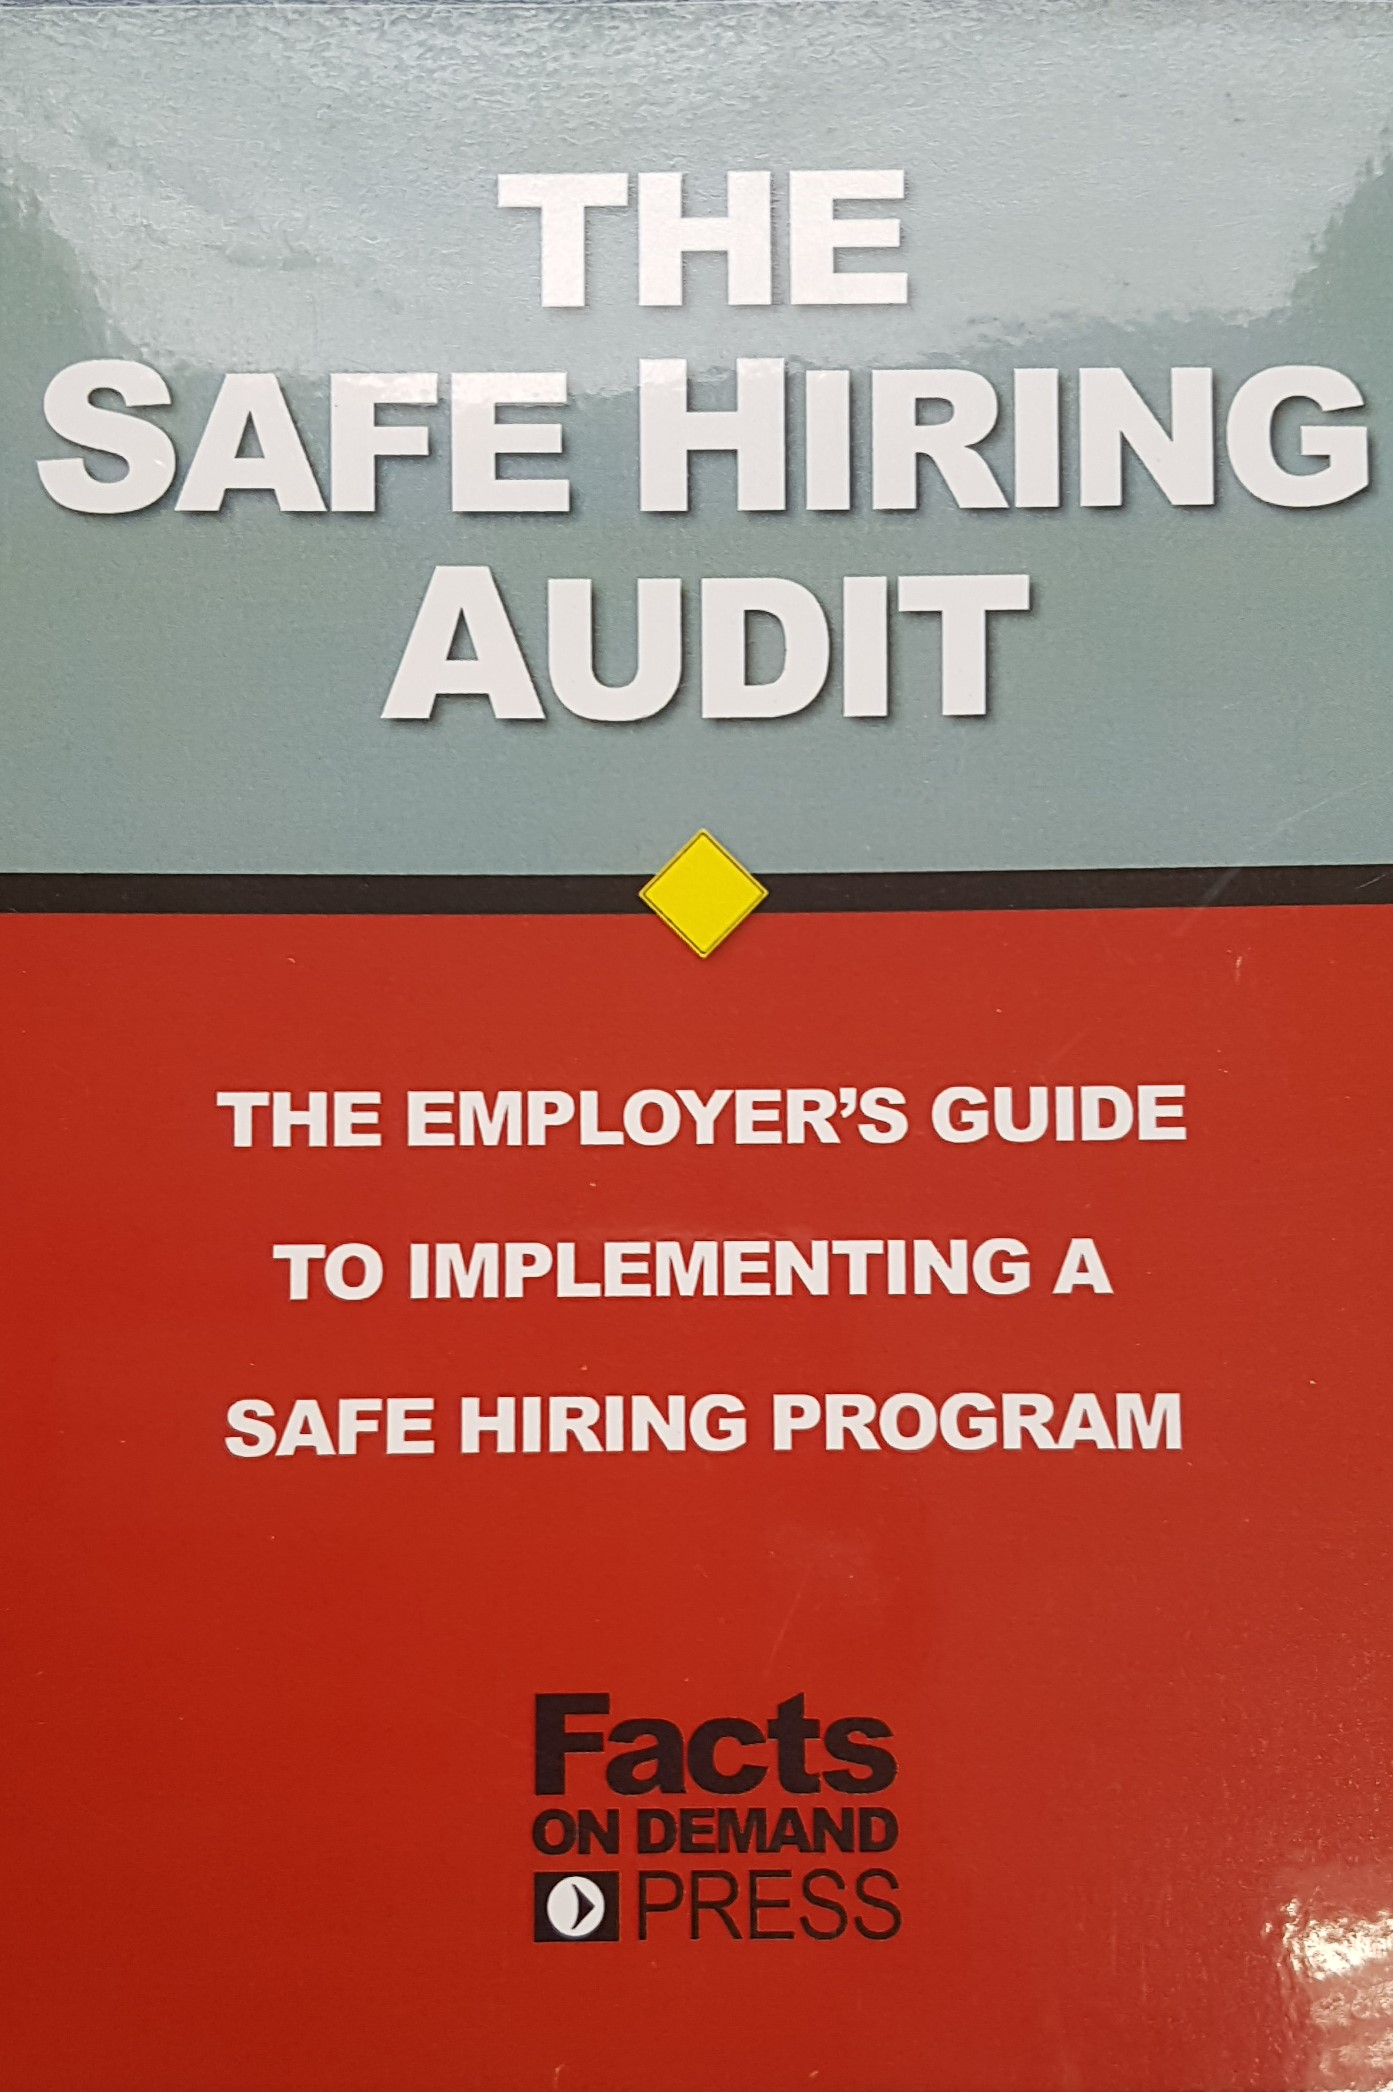 Description The Safe Hiring Audit